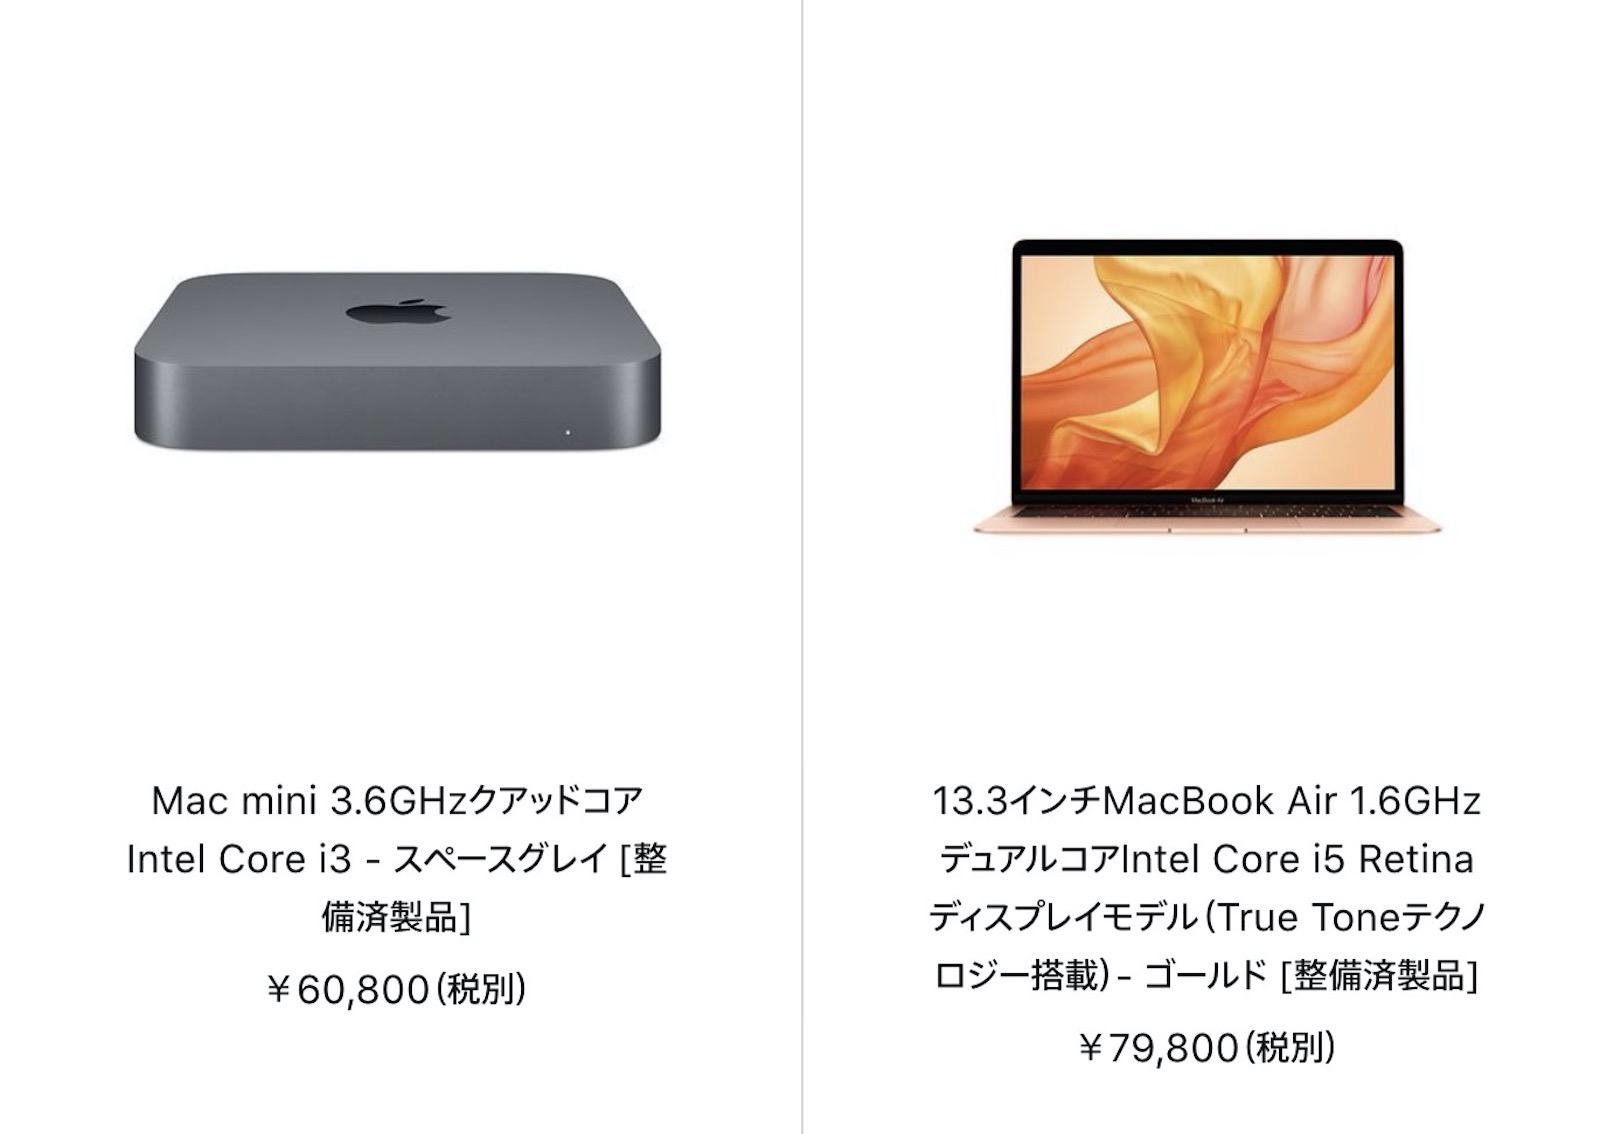 Mac mini and macbookair refurbished 20200513